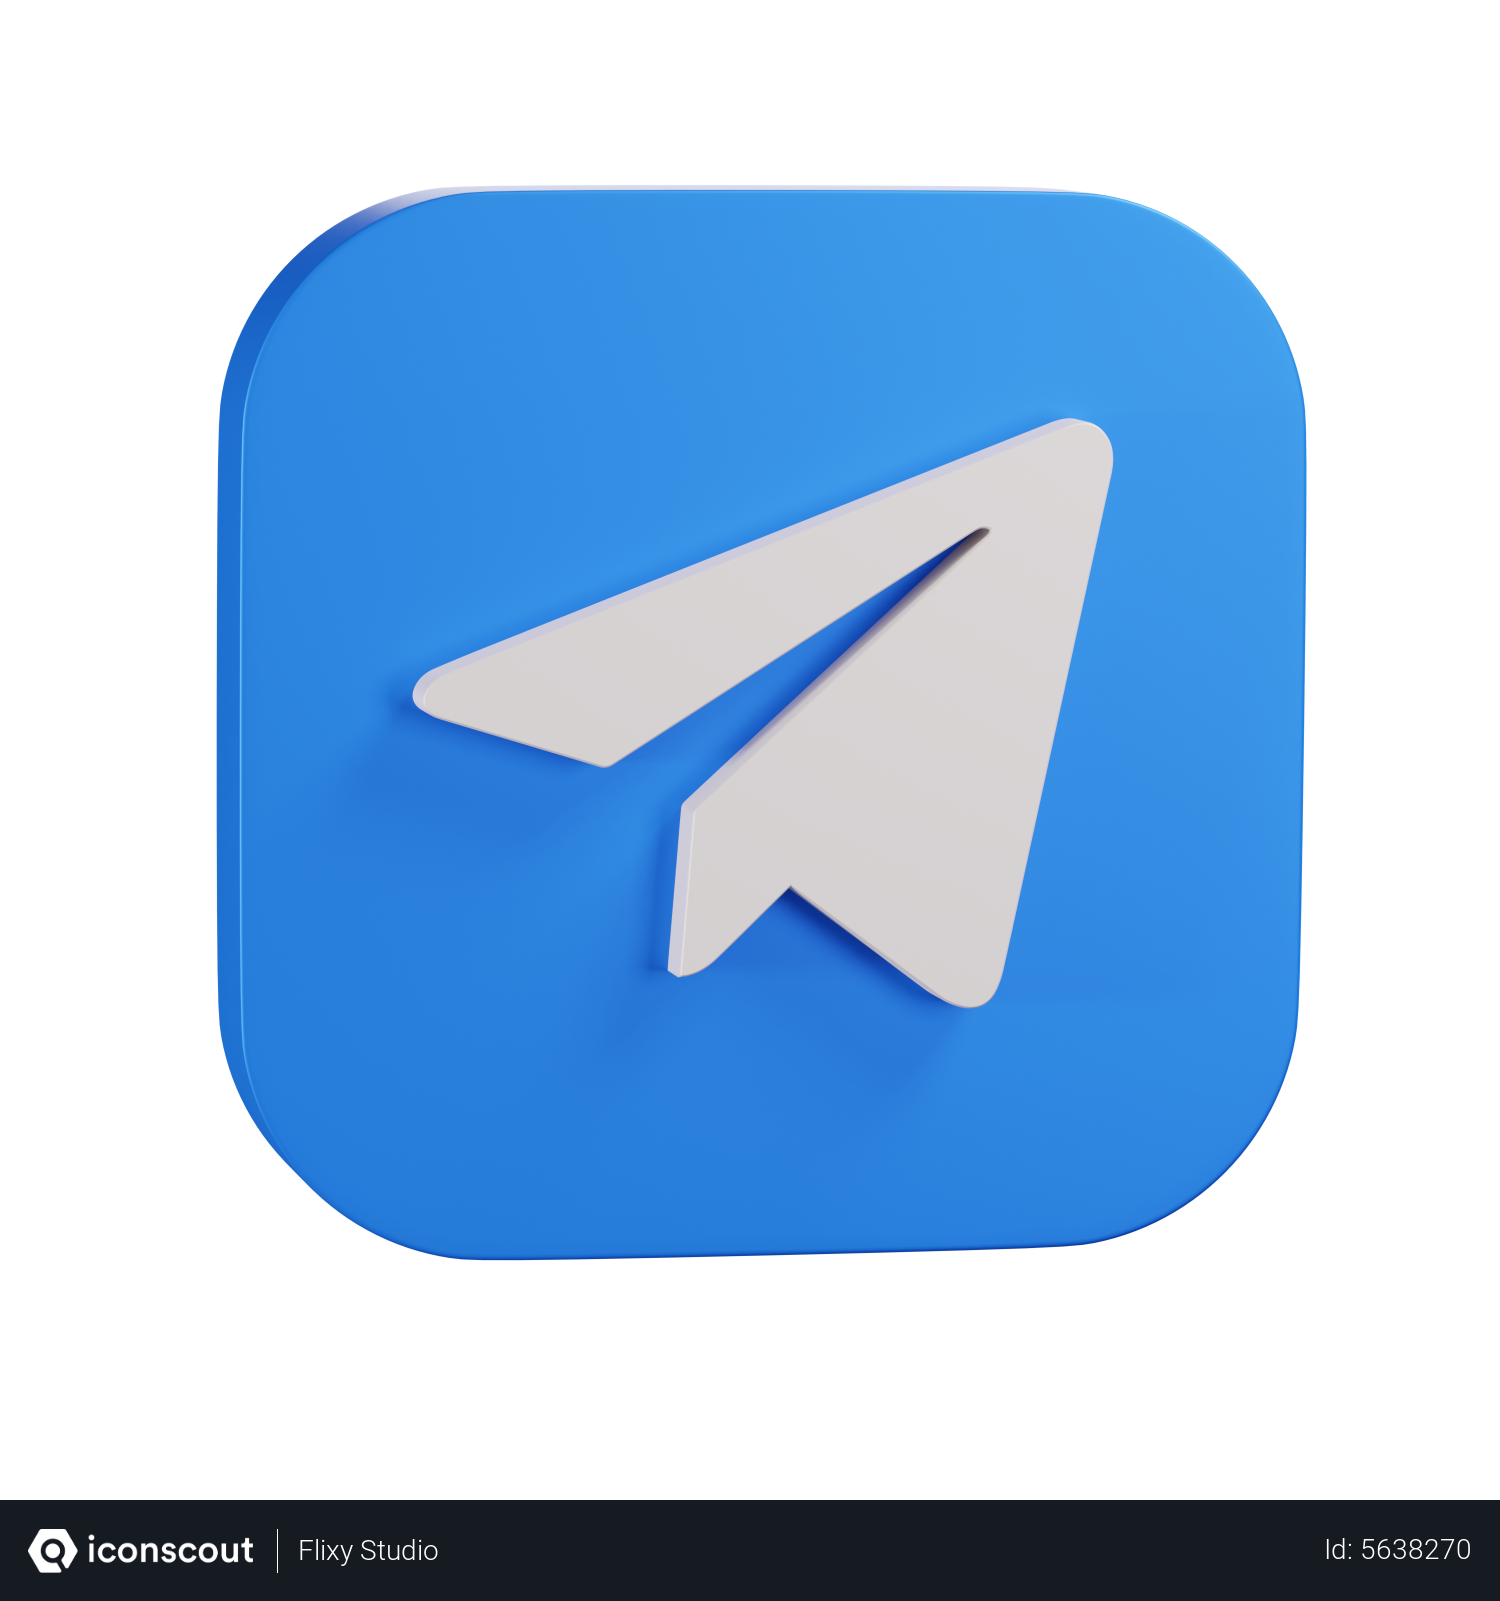 Telegram logo Archives - SimilarPNG